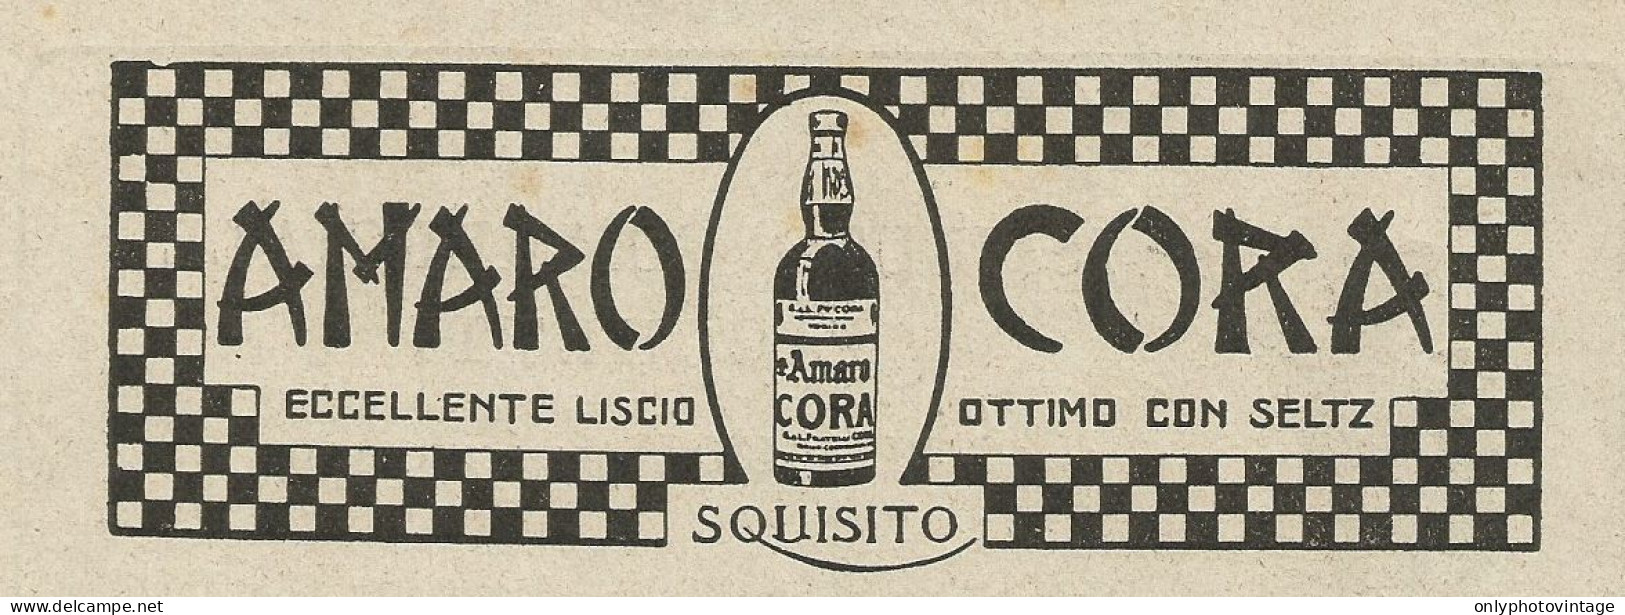 Amaro Cora - Pubblicità 1933 - Advertising - Pubblicitari